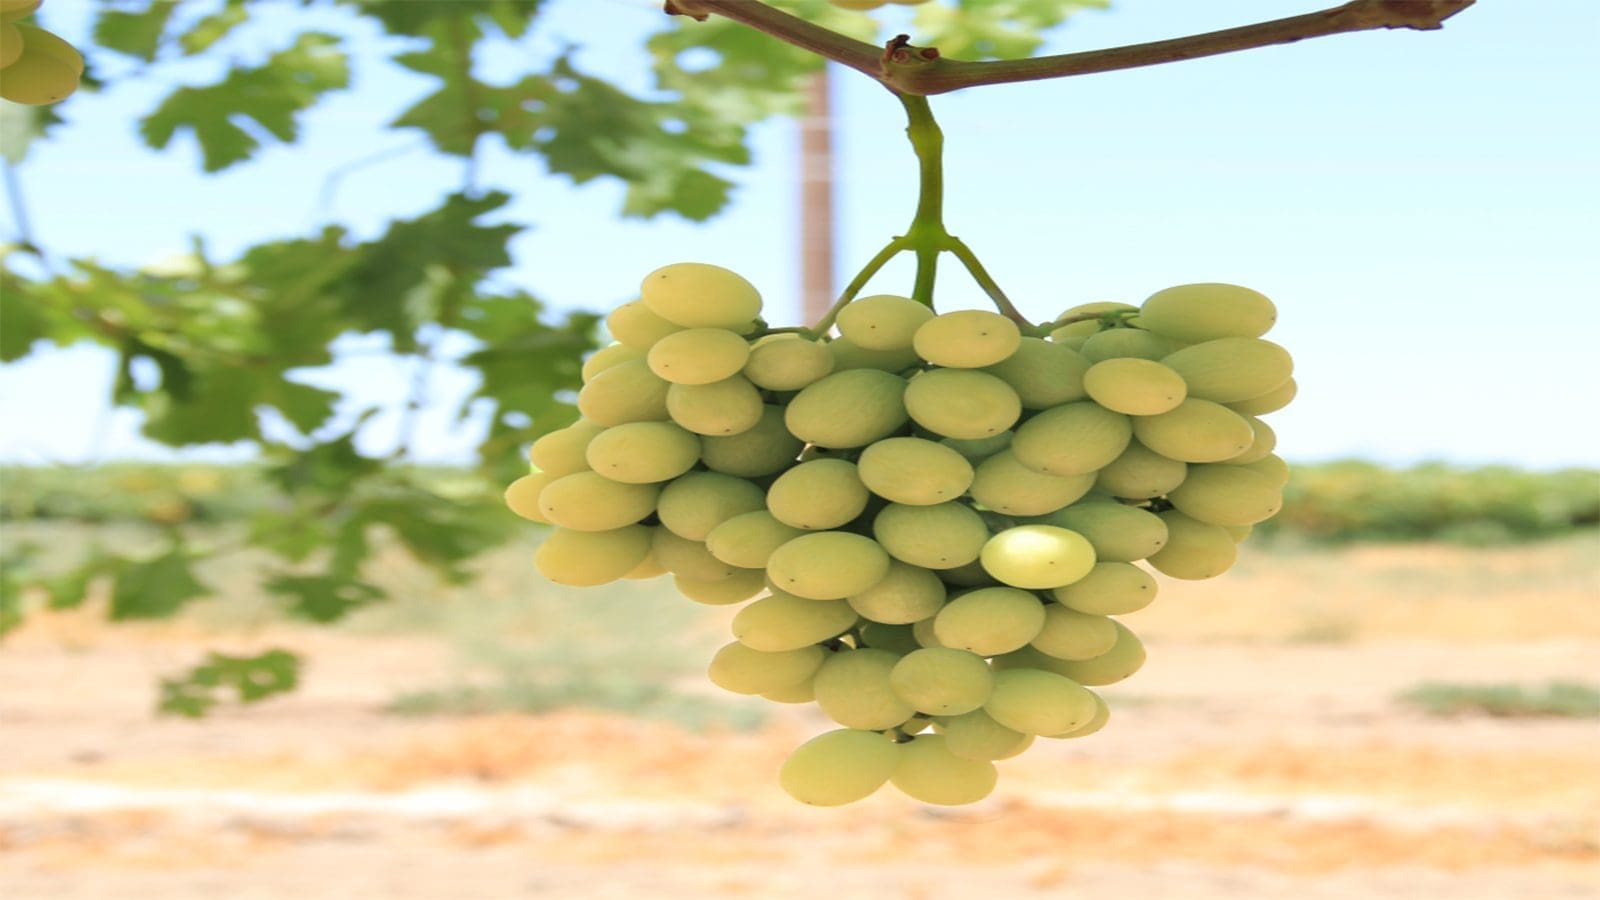 Cornell AgriTech, Sun World International develop two grape varieties after 13 years of work